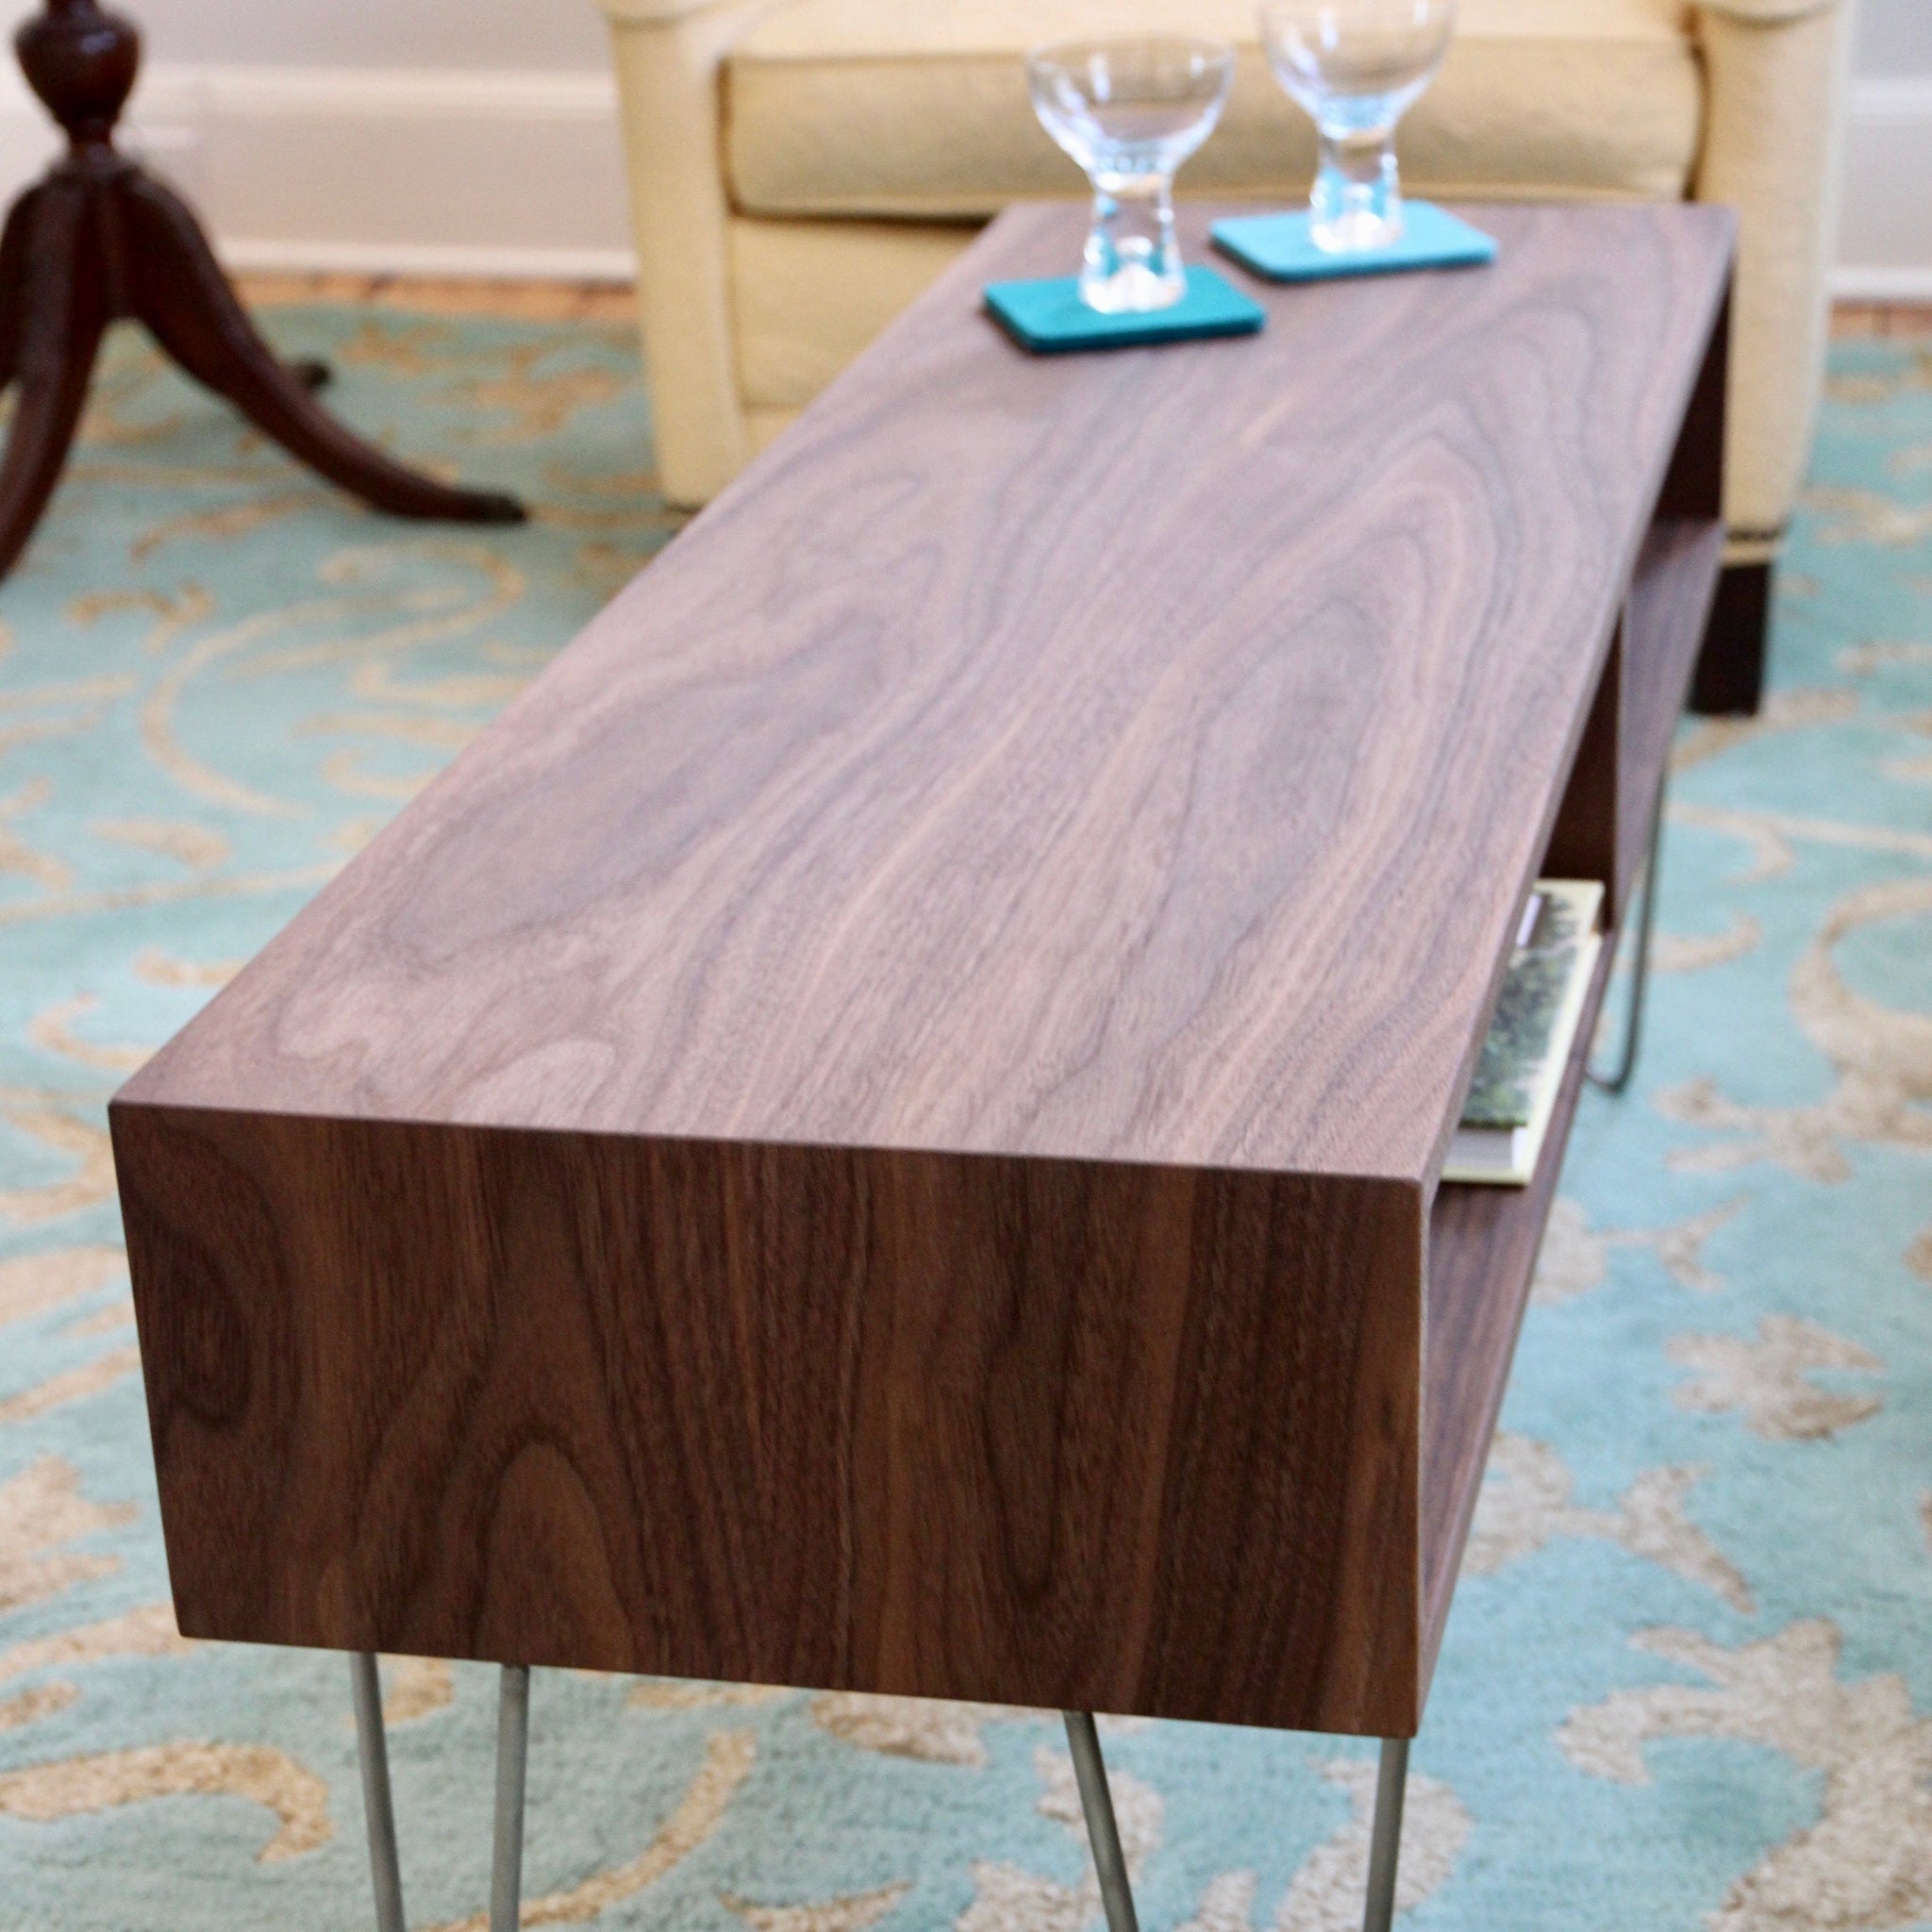 Walnut Coffee Table, Mid-Century Modern Style - Krøvel Furniture Co. Handmade in Maine